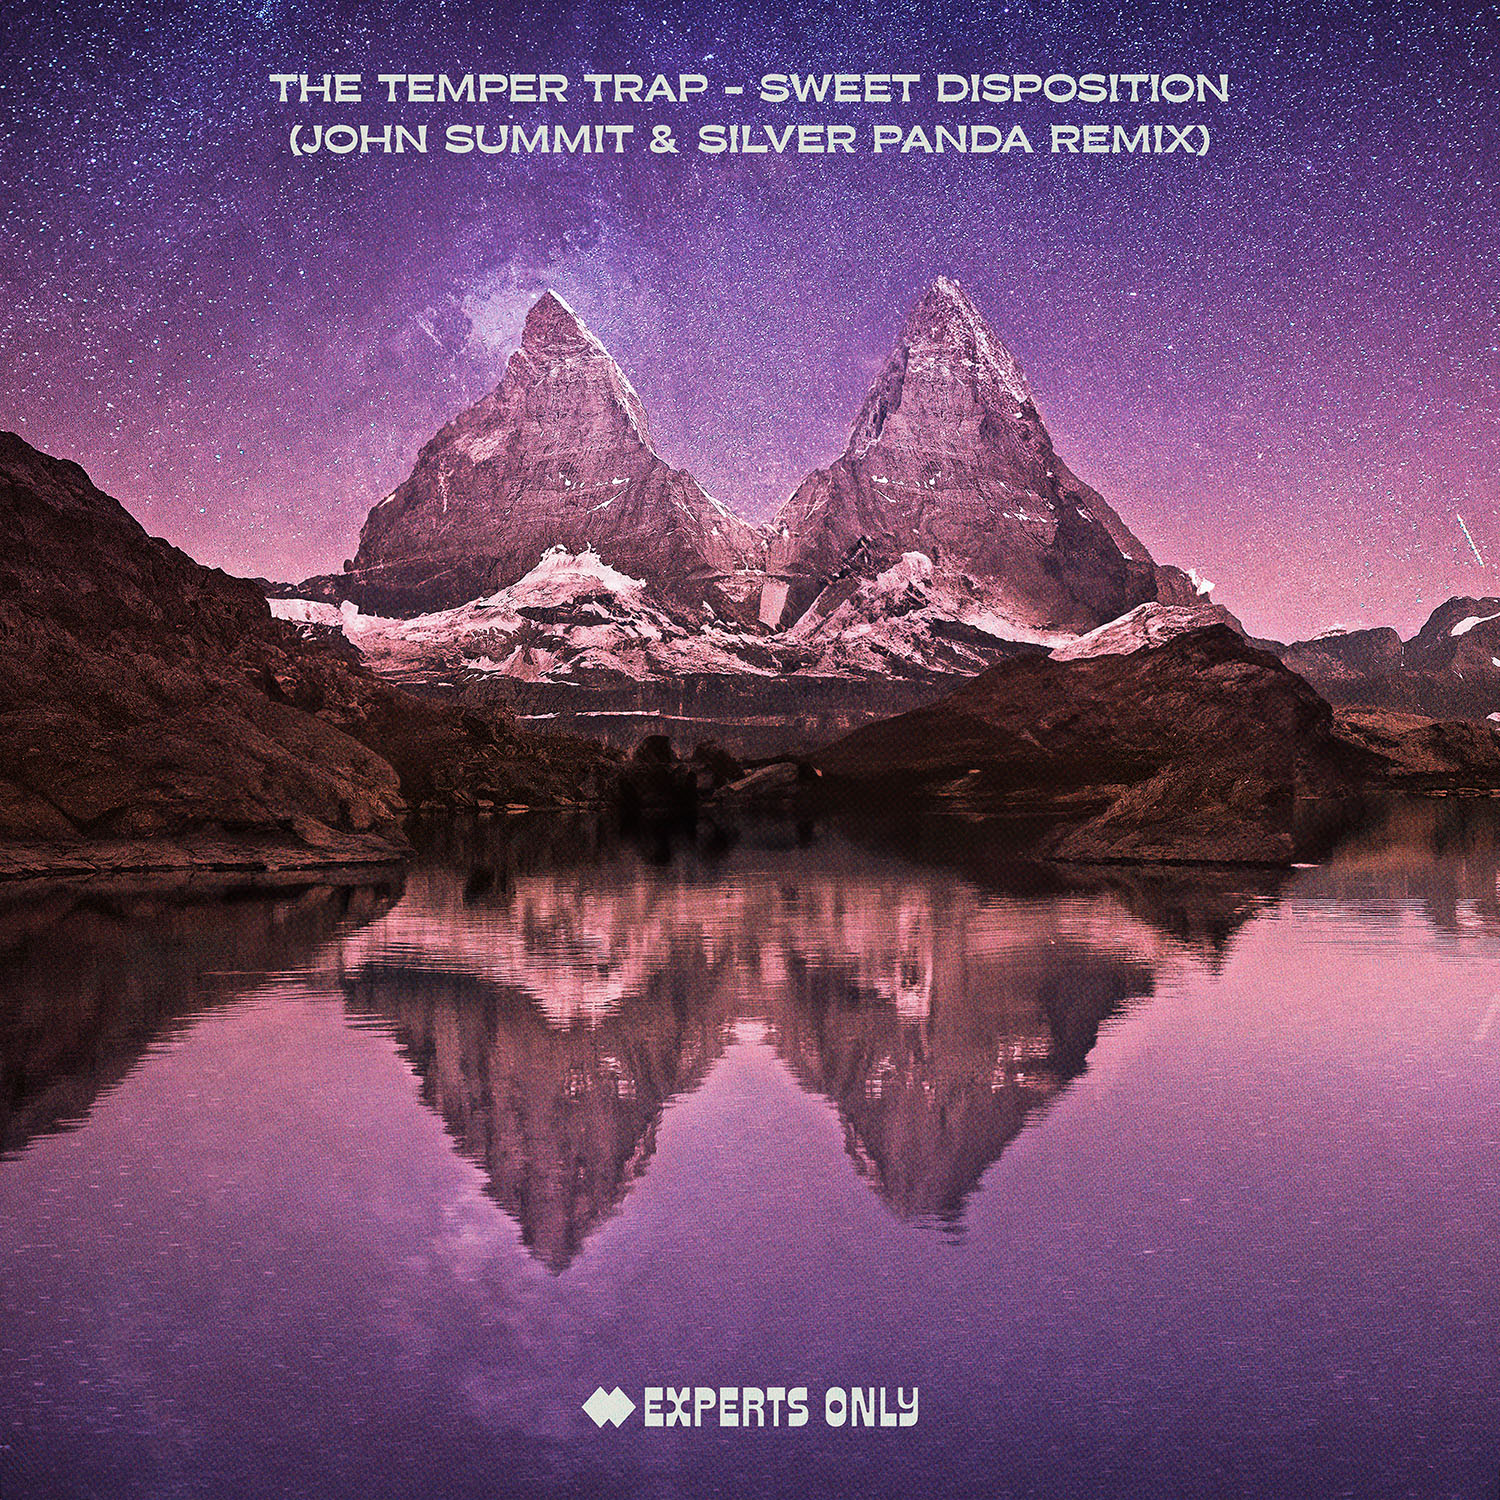 John Summit & Silver Panda drop their remix of The Temper Trap “Sweet Disposition”